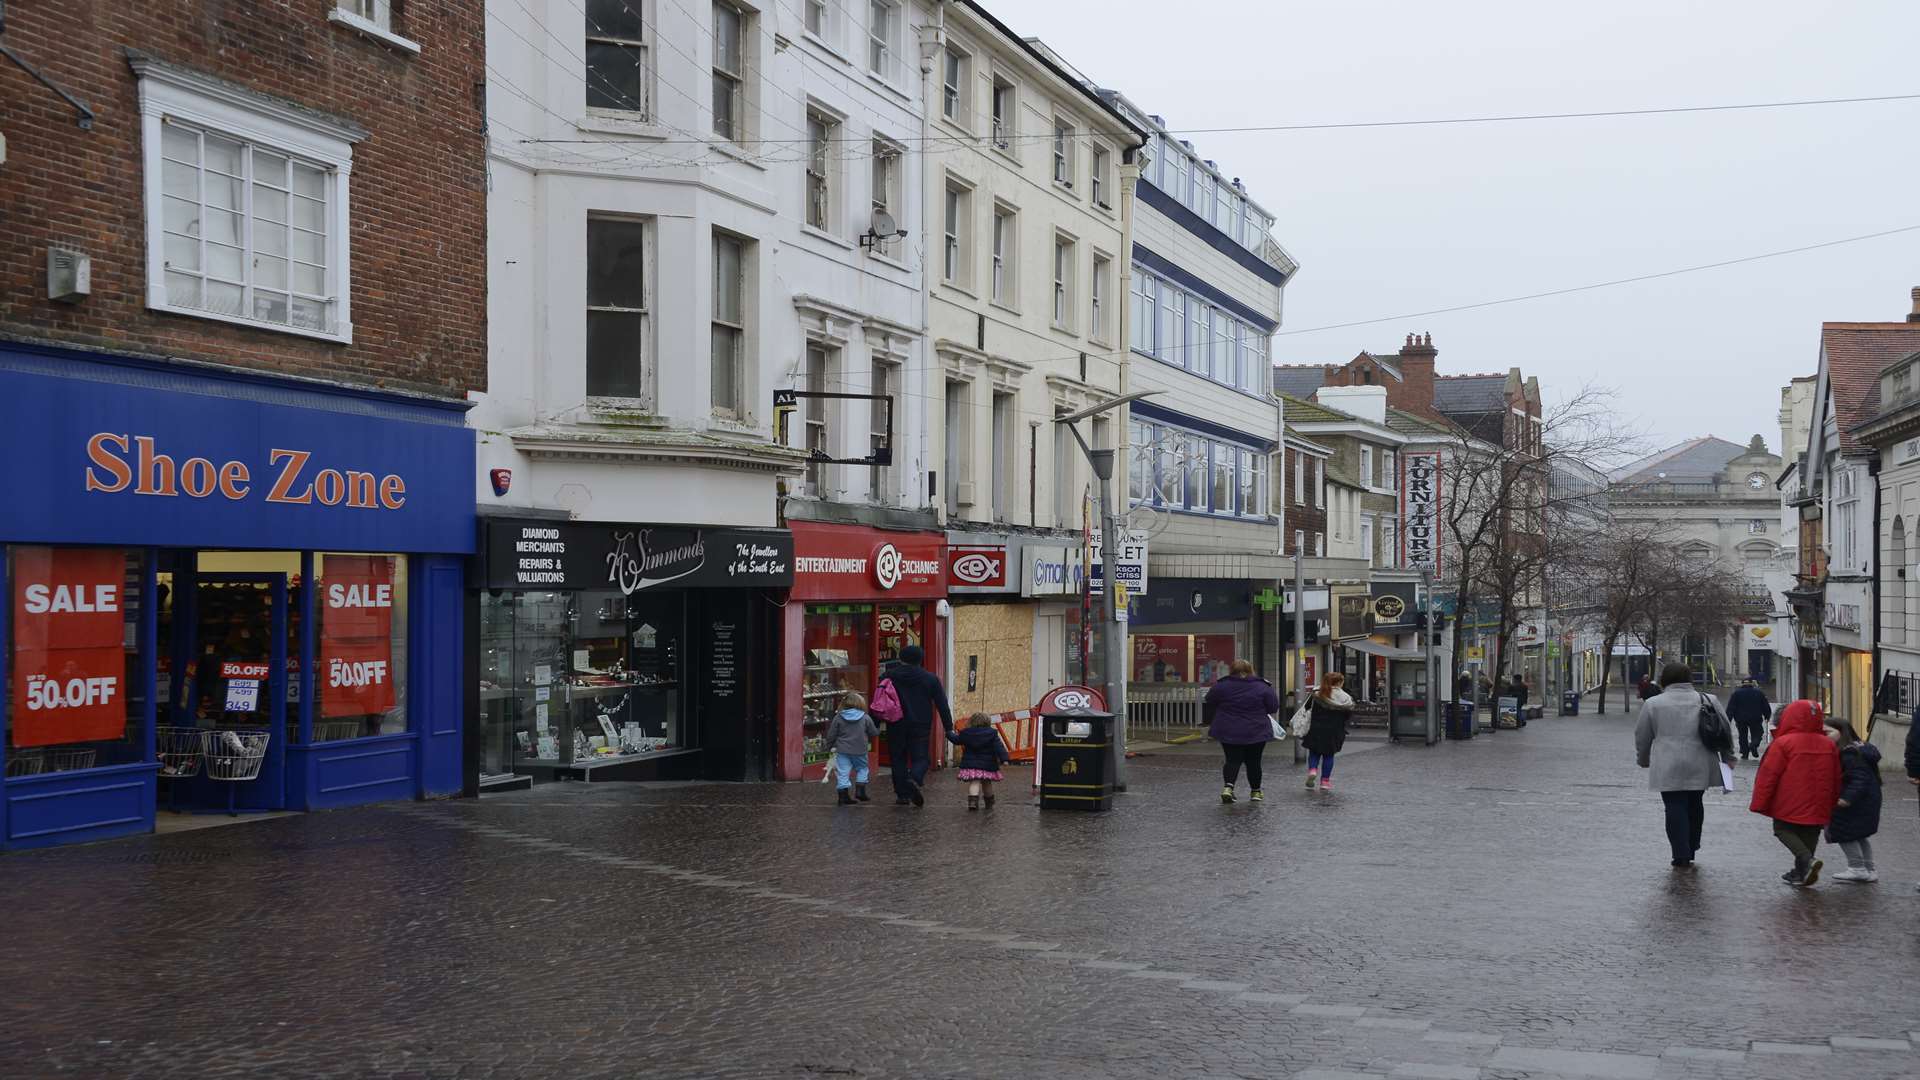 Folkestone Town centre's market occupies Sandgate Road.